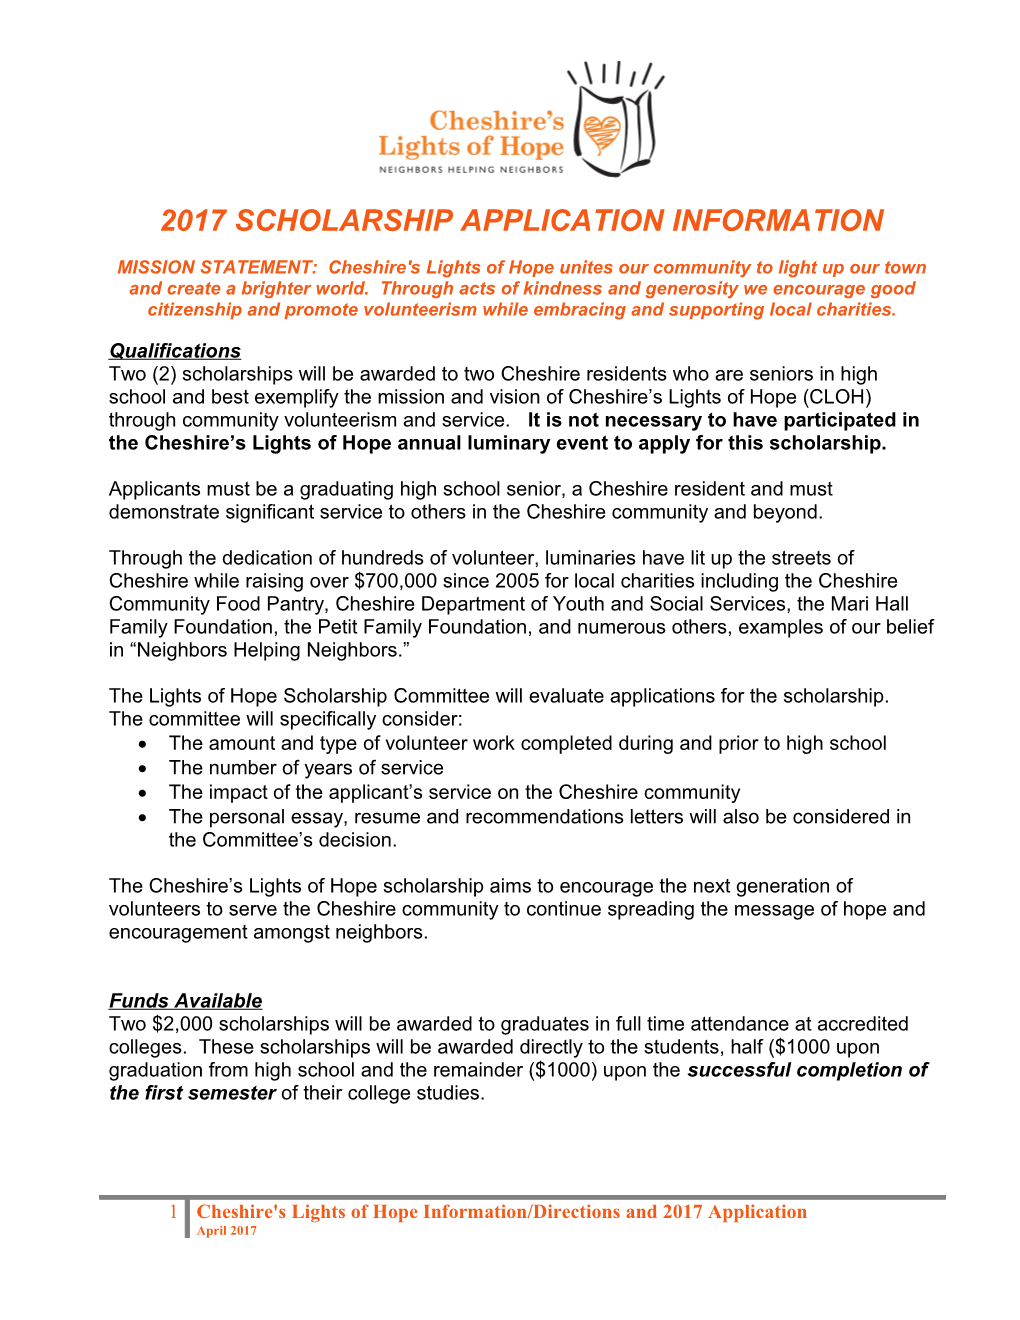 2017 Scholarship Application Information